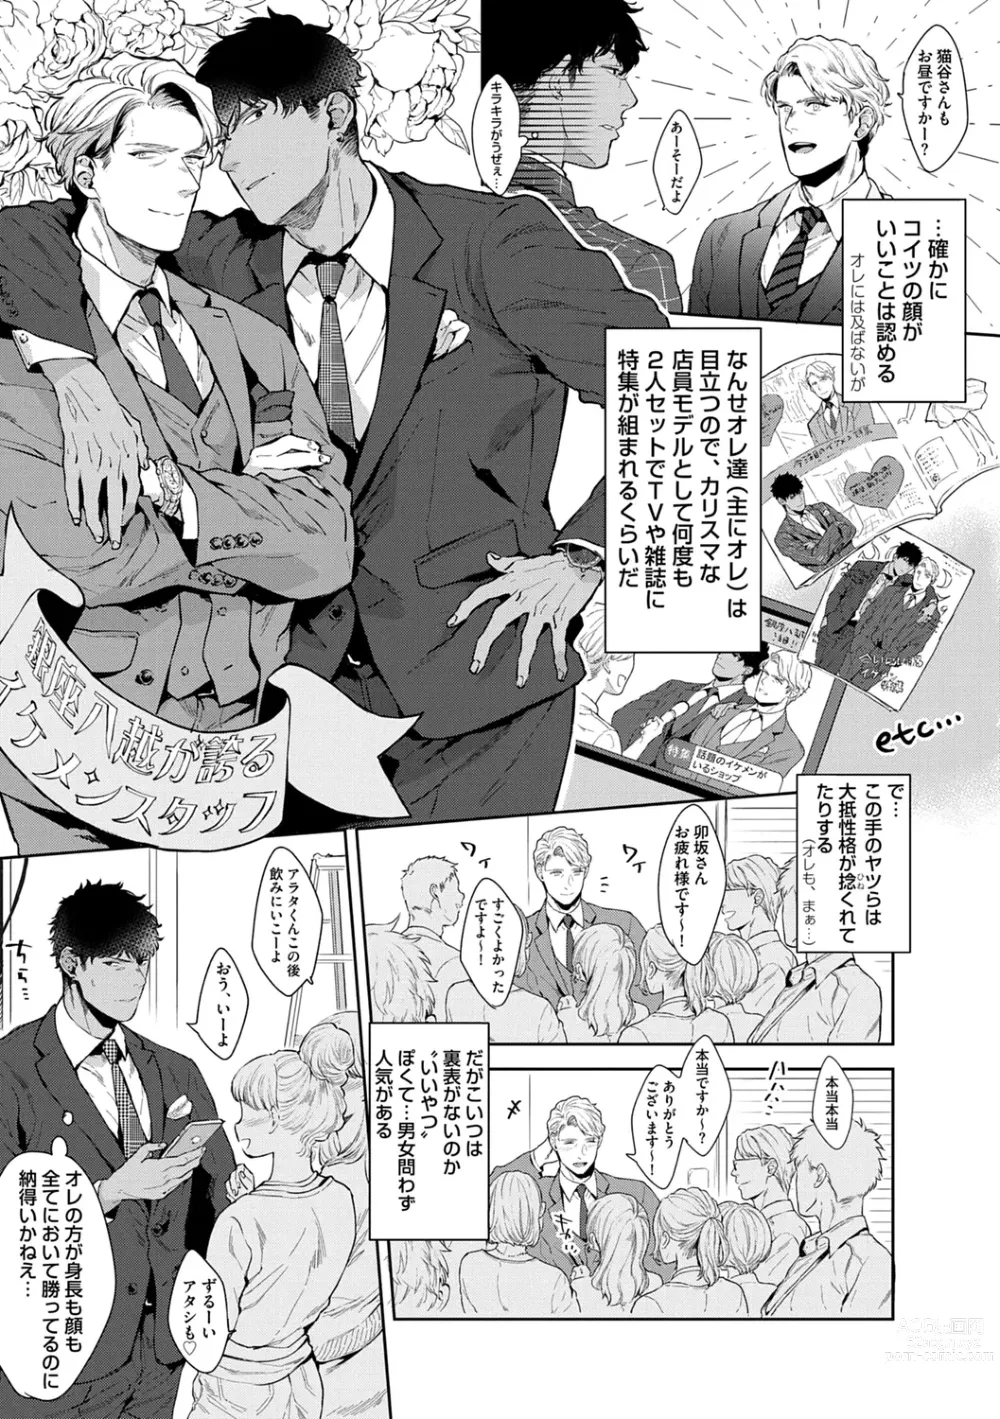 Page 7 of manga Iyarashii Mannequin ~Gachimuchi Suit Seiyoku Zukan~